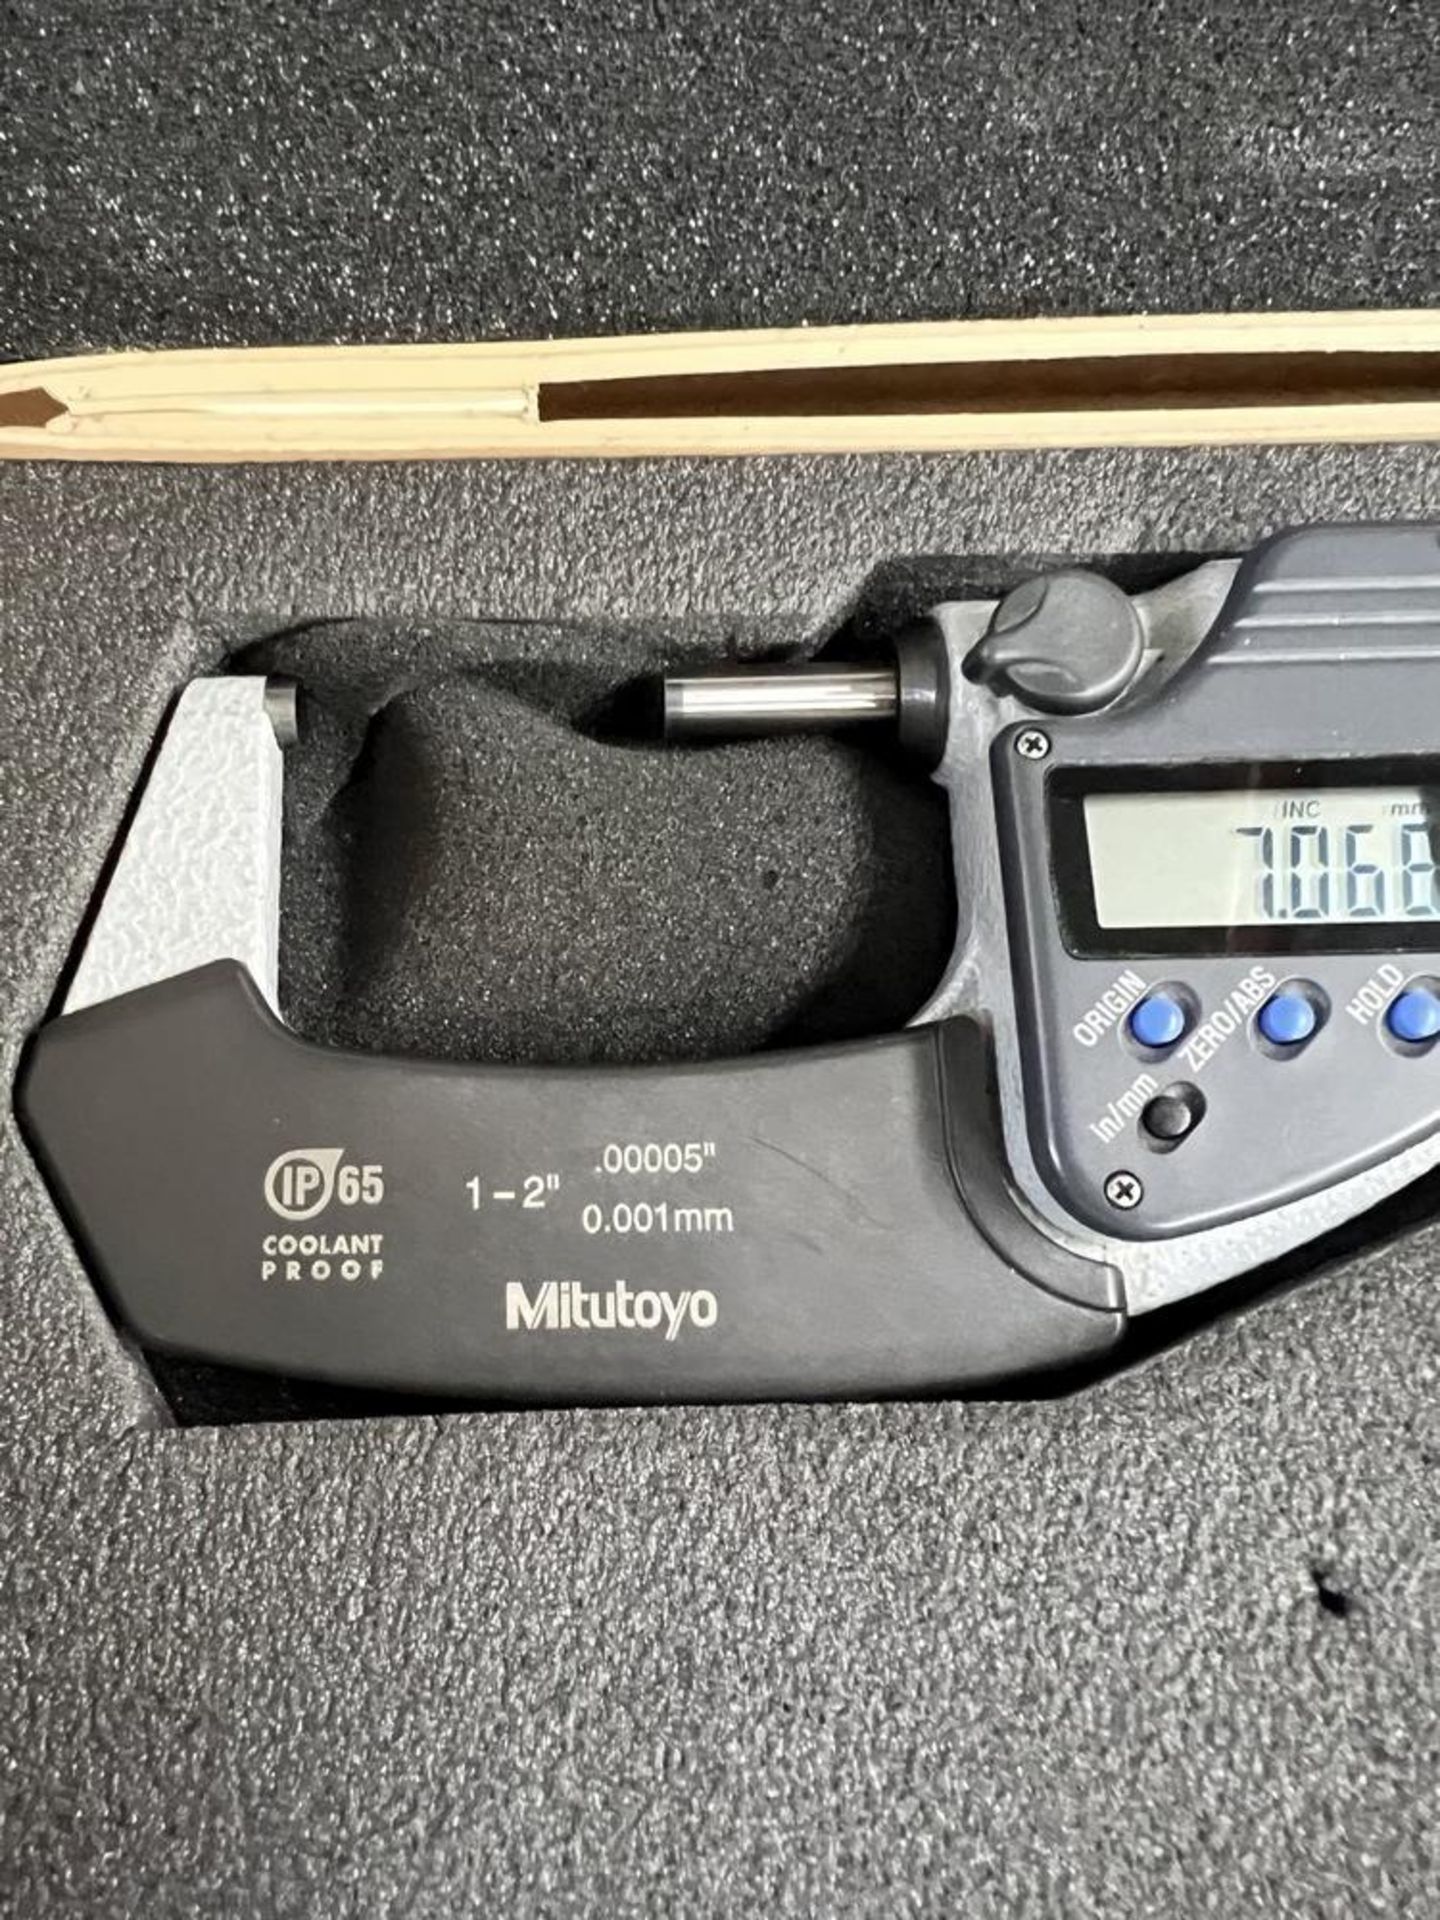 Mitutoyo 1-2" Digital OD Micrometer - Image 4 of 5